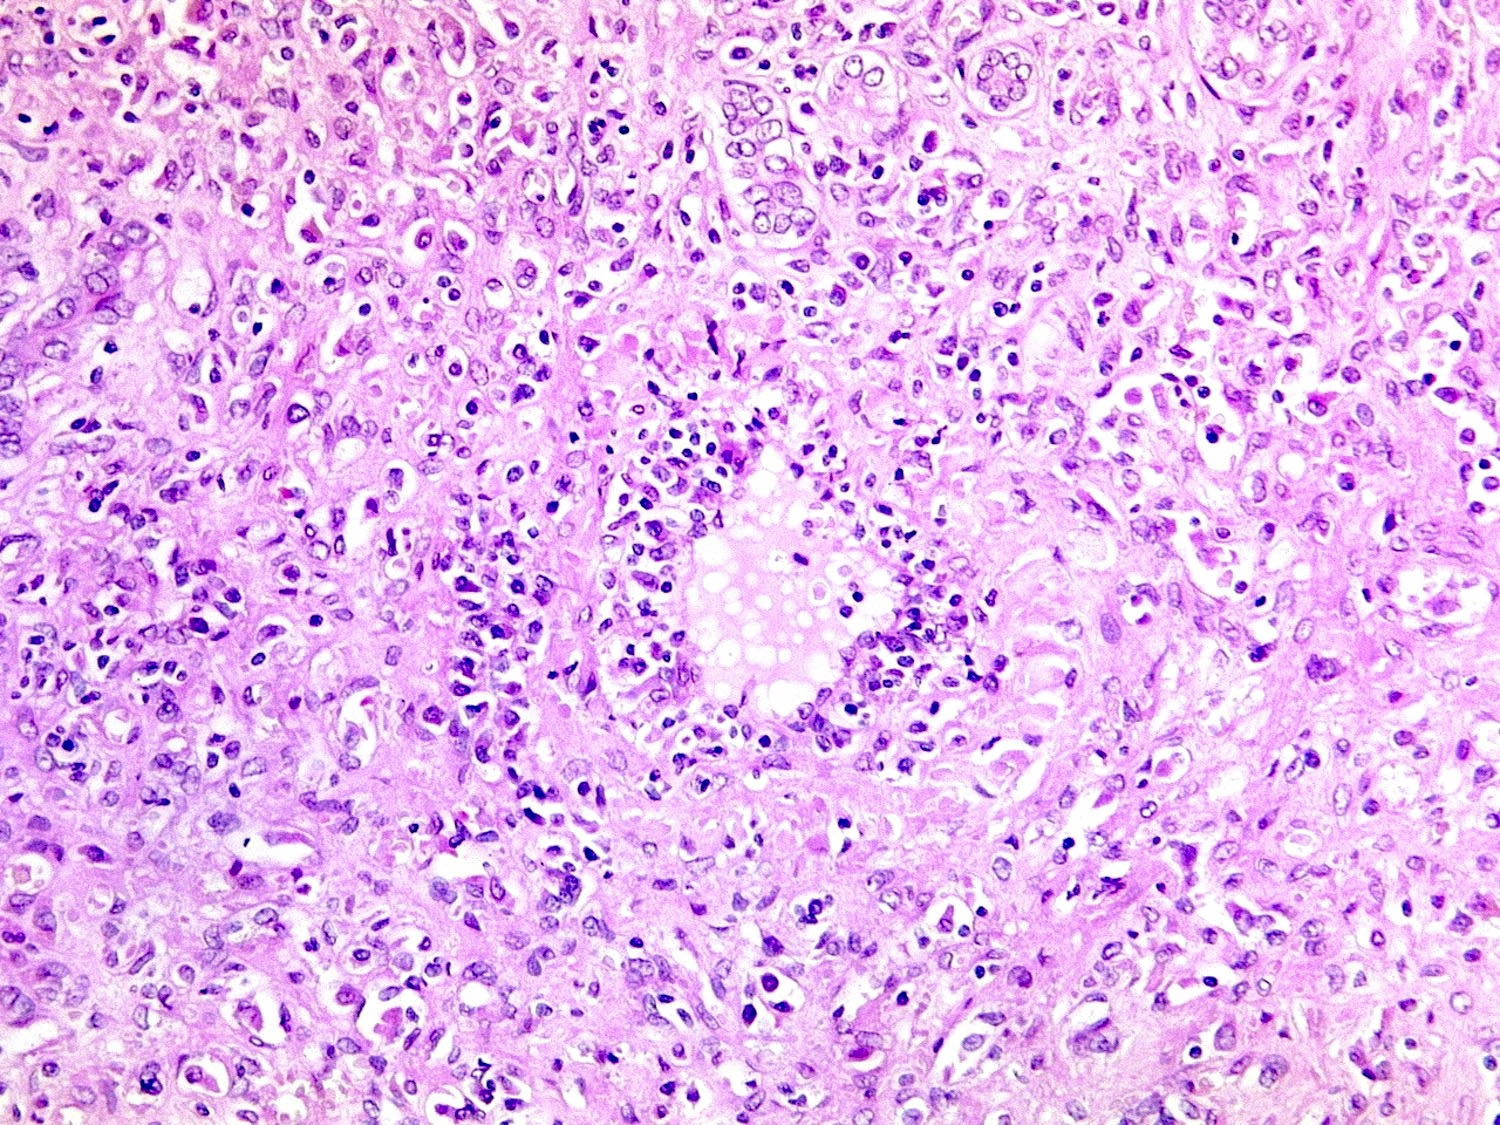 Hathothane associated hepatocellular necrosis